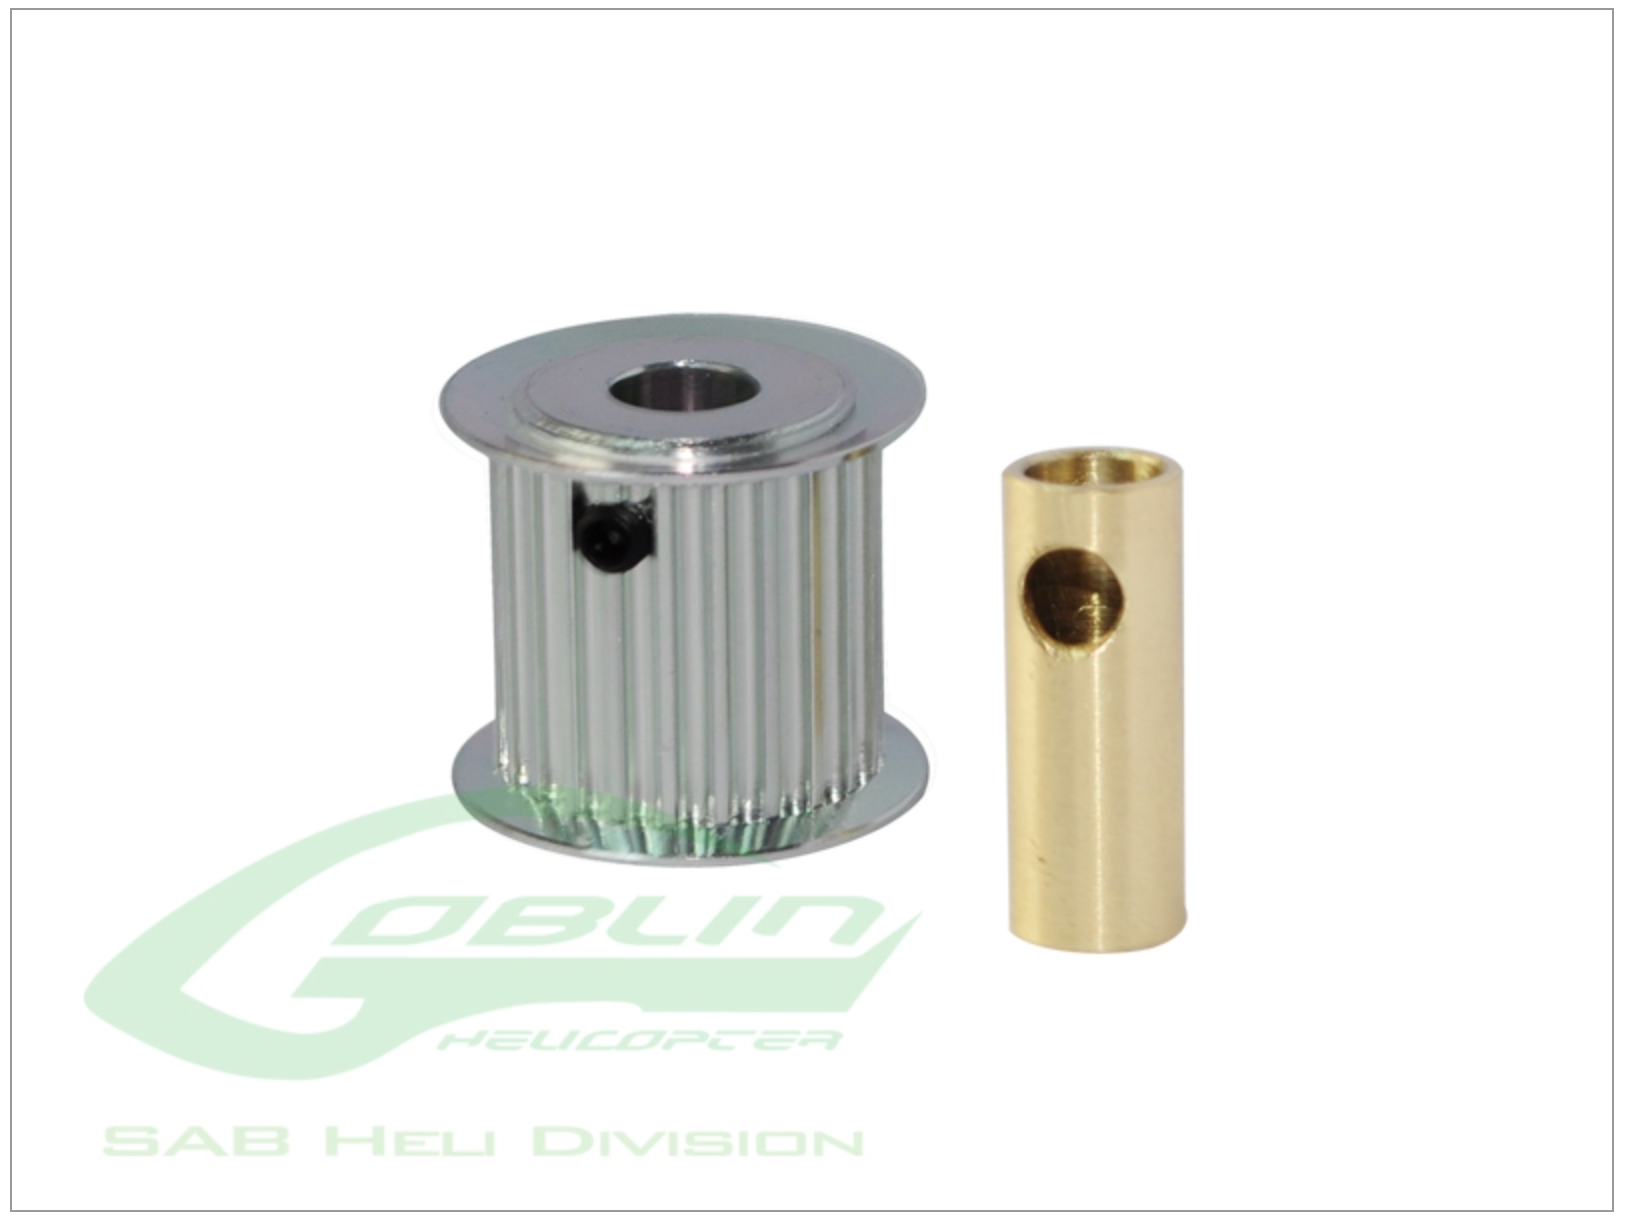 H0175-25-S Aluminum Motor Pulley 25T (for 6/8mm motor shaft)